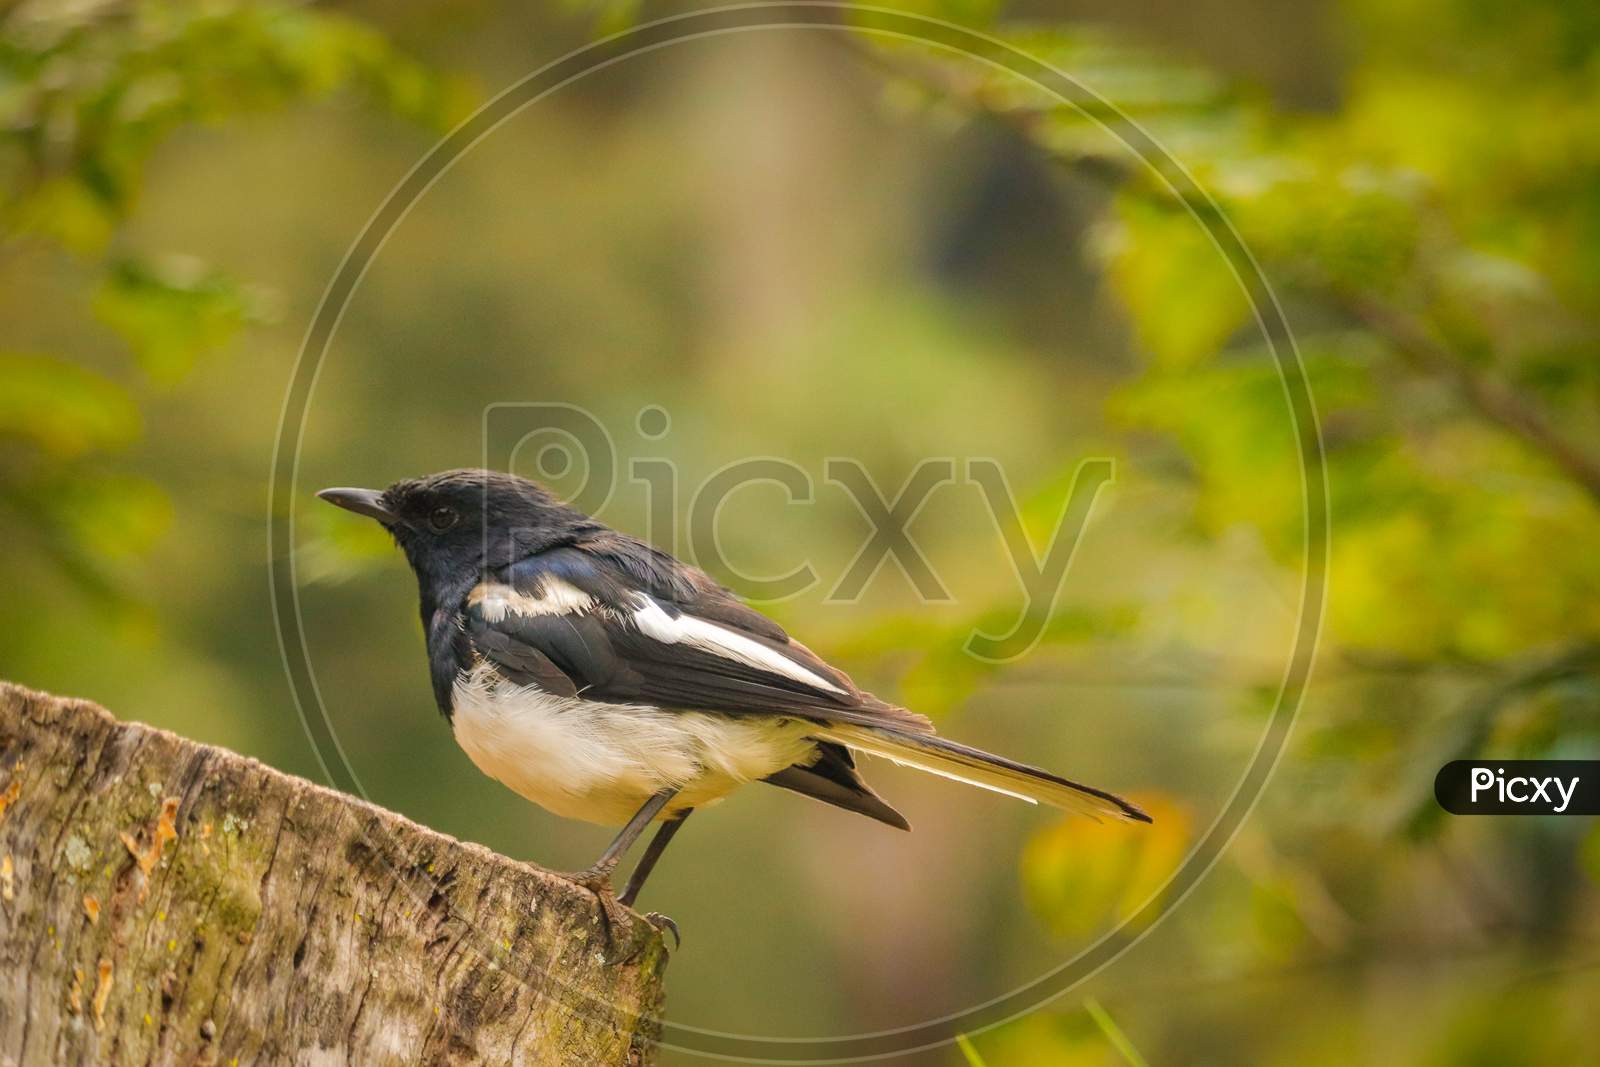 Bird standing on wood. Field blur